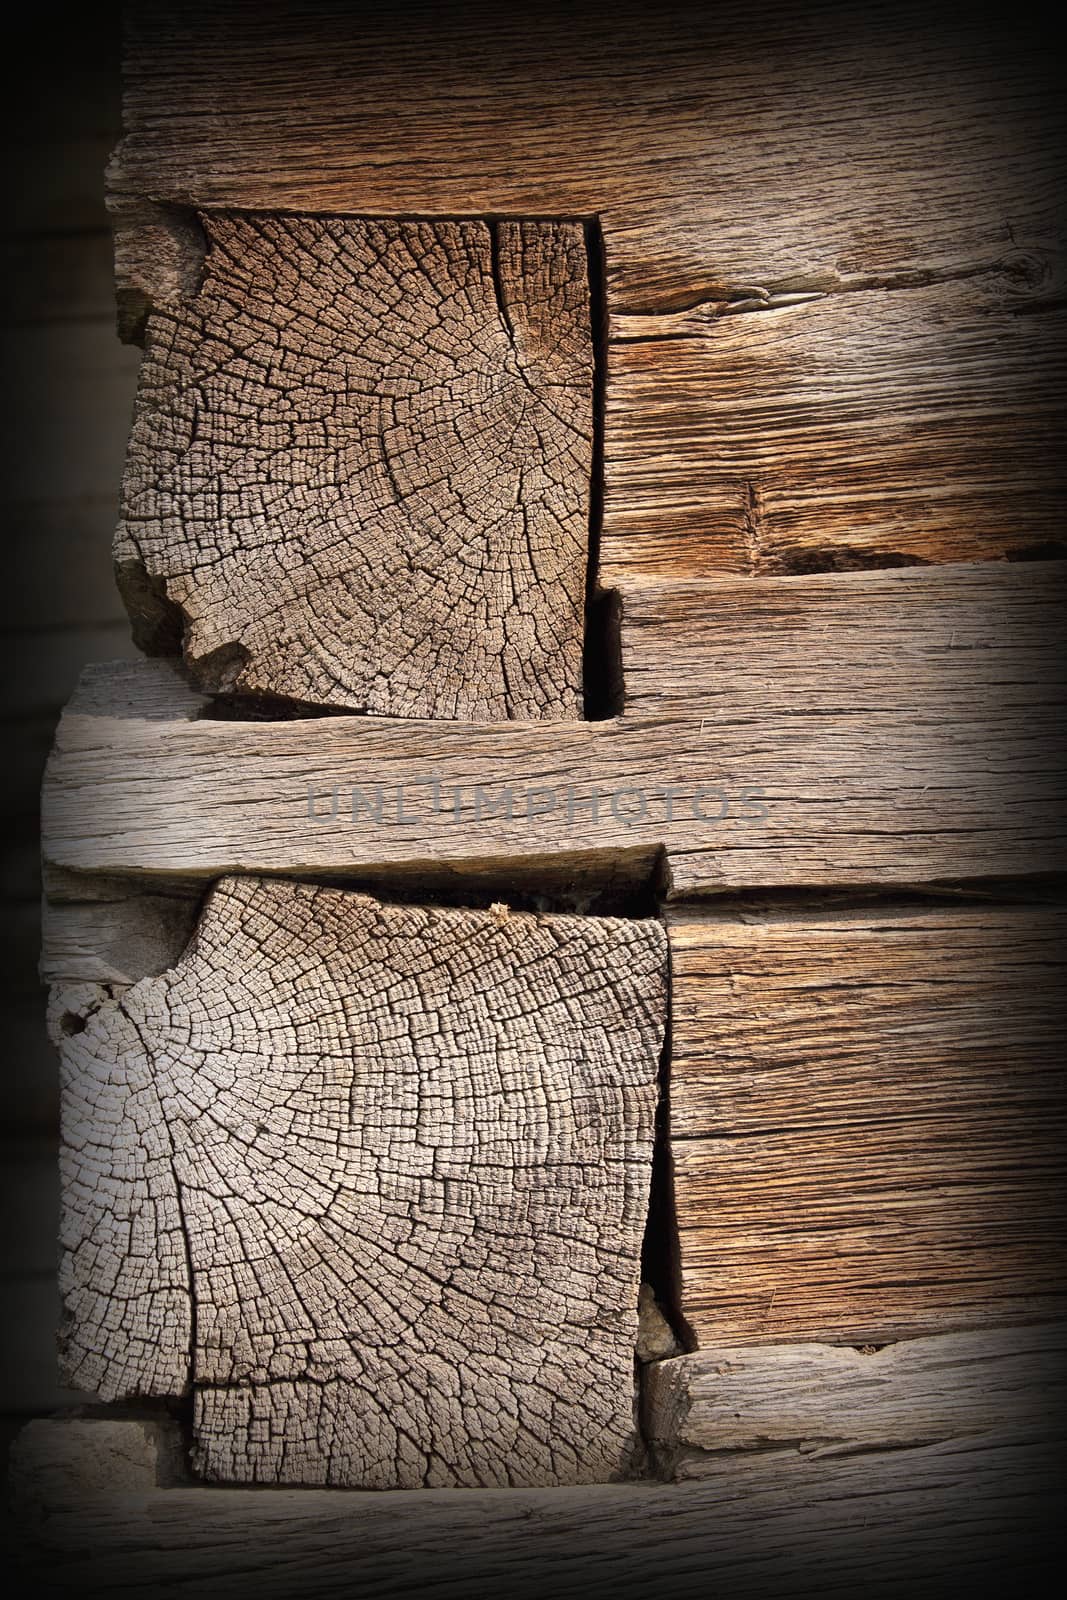 traditional wood beams detail on transylvanian church wall